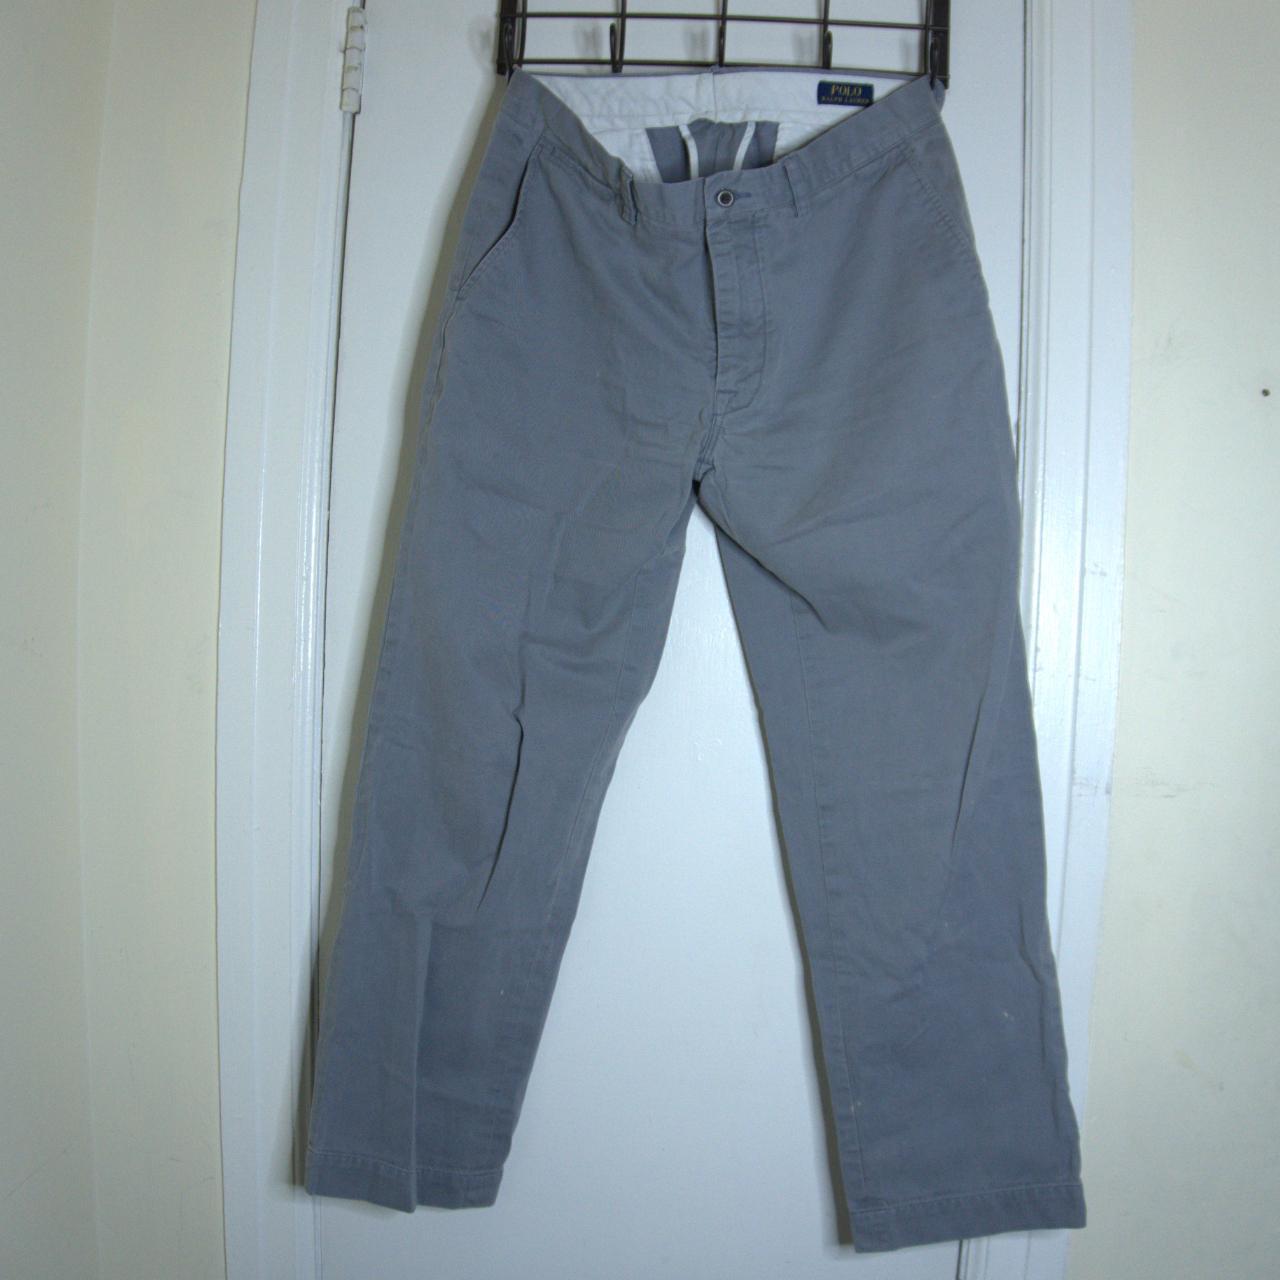 RALPH LAUREN Grey Slim Pants - Washed - Minimal... - Depop